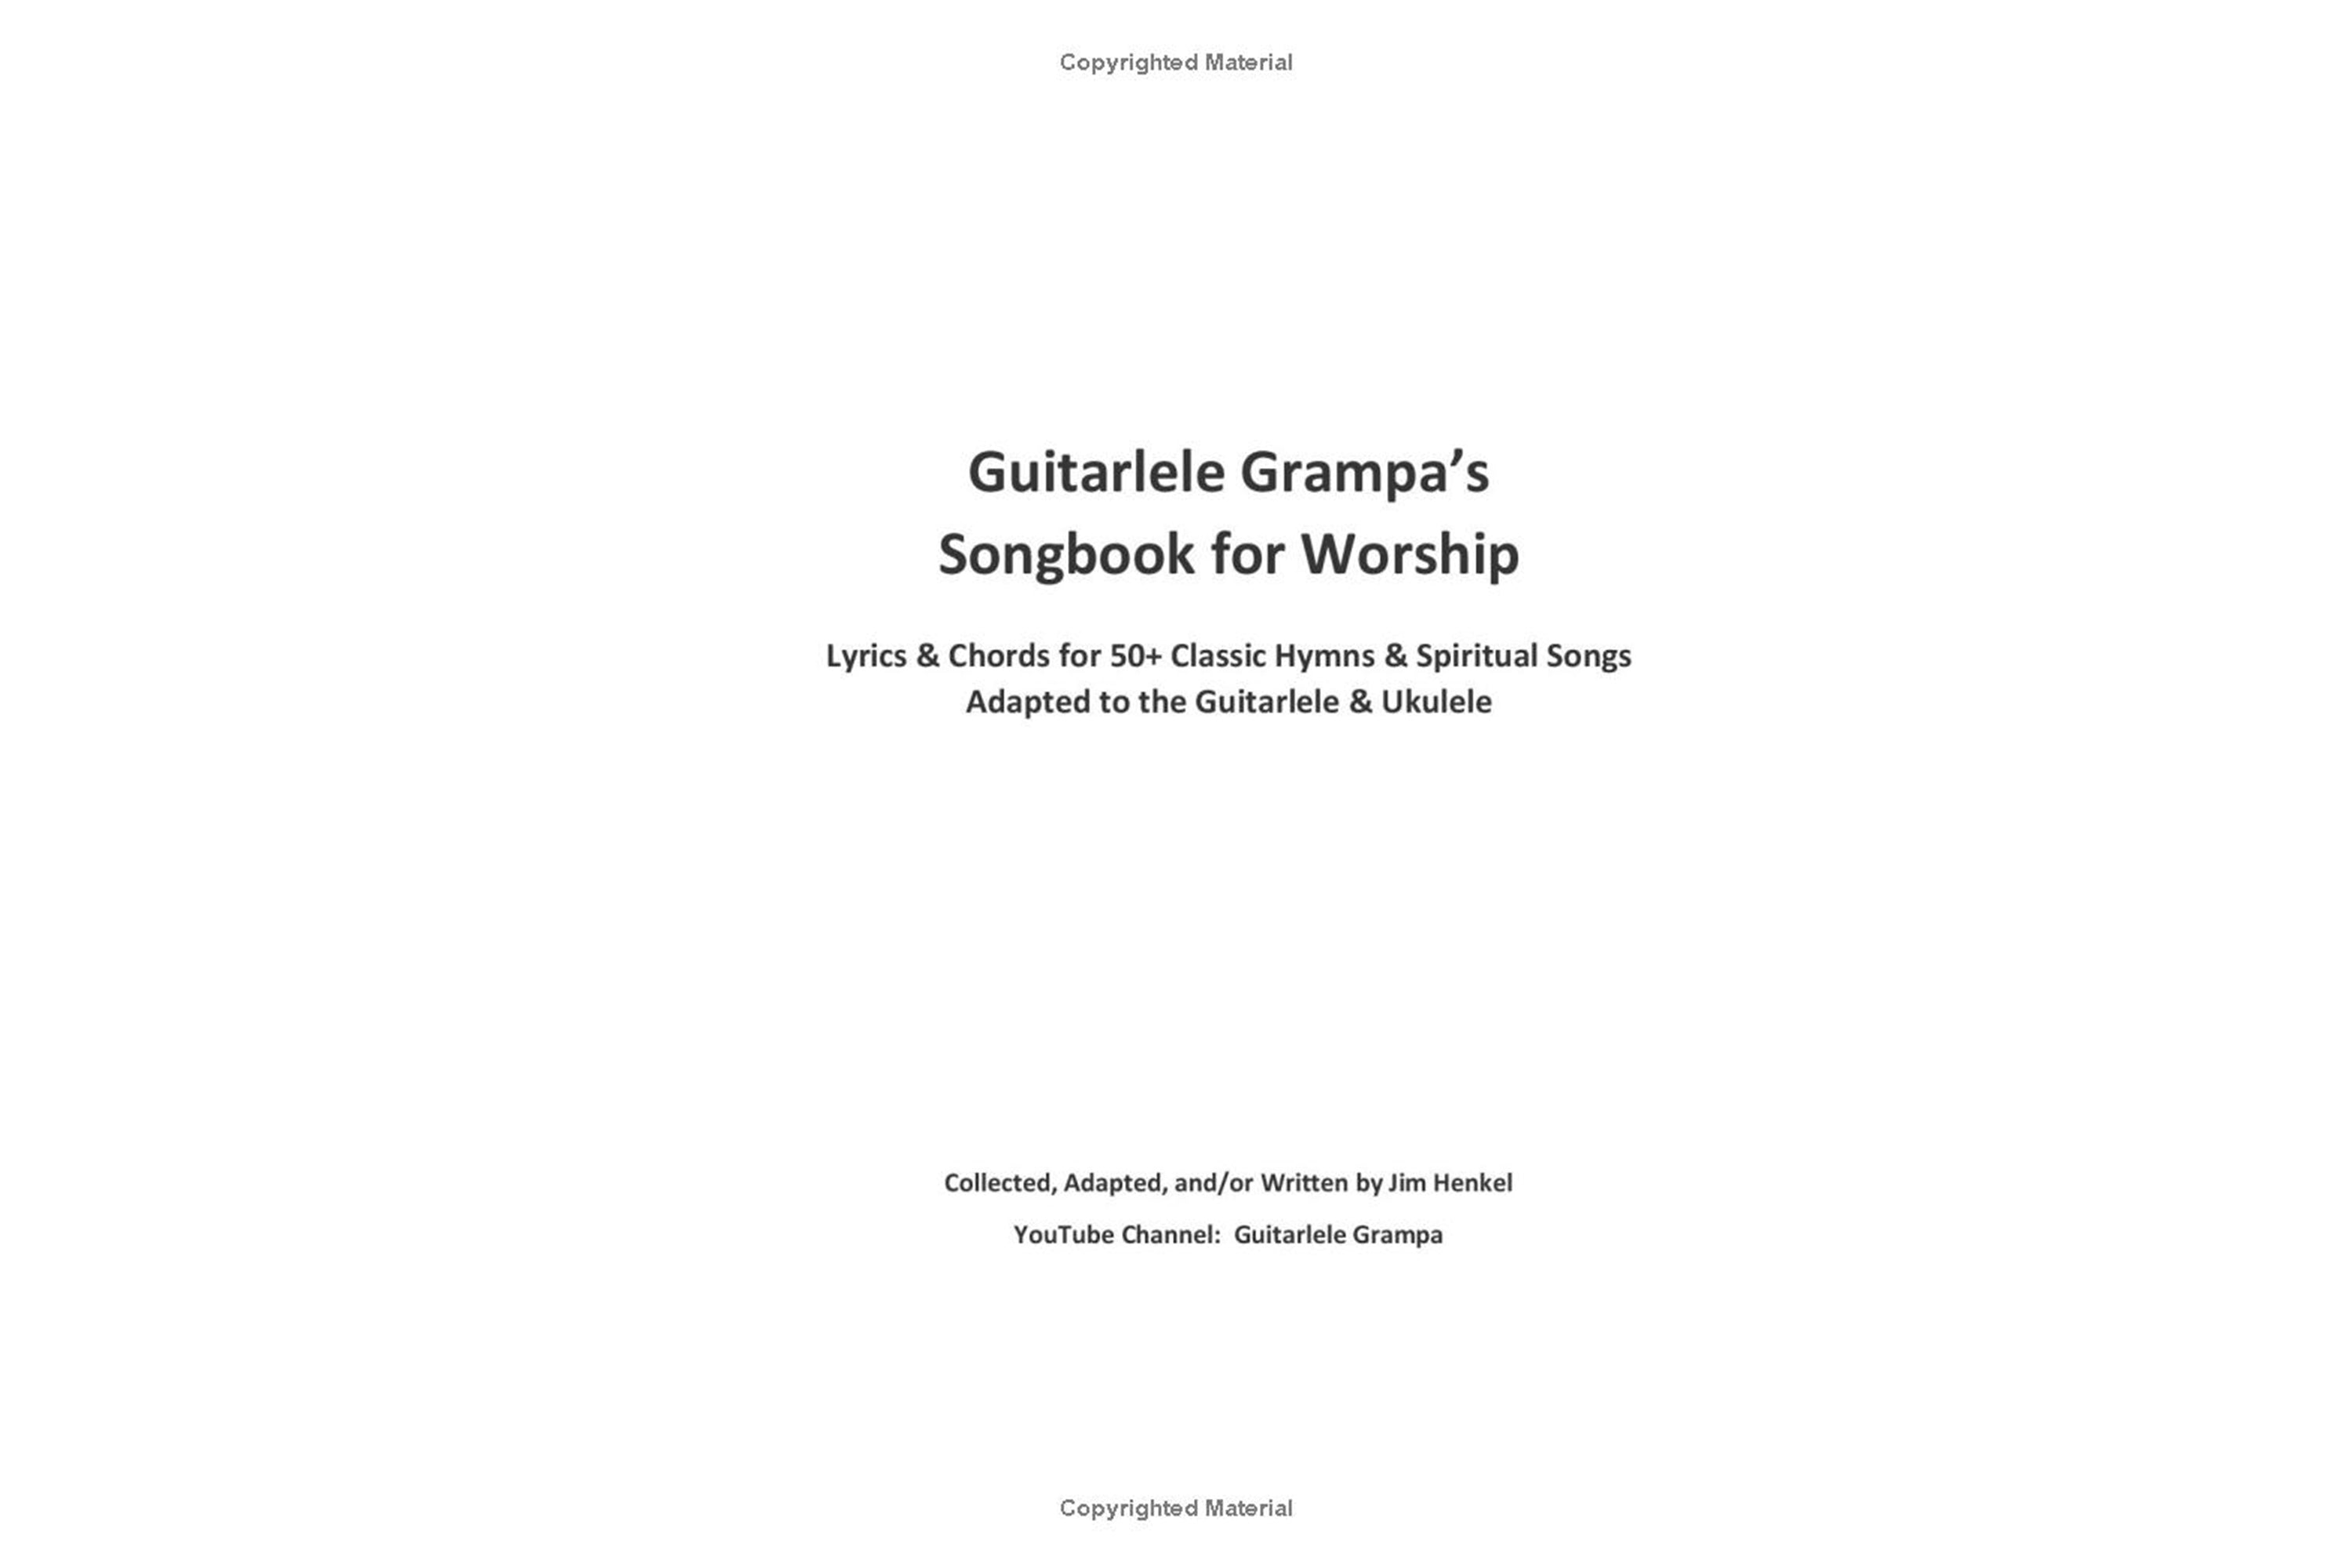 Guitarlele Grampa's Songbook for Worship